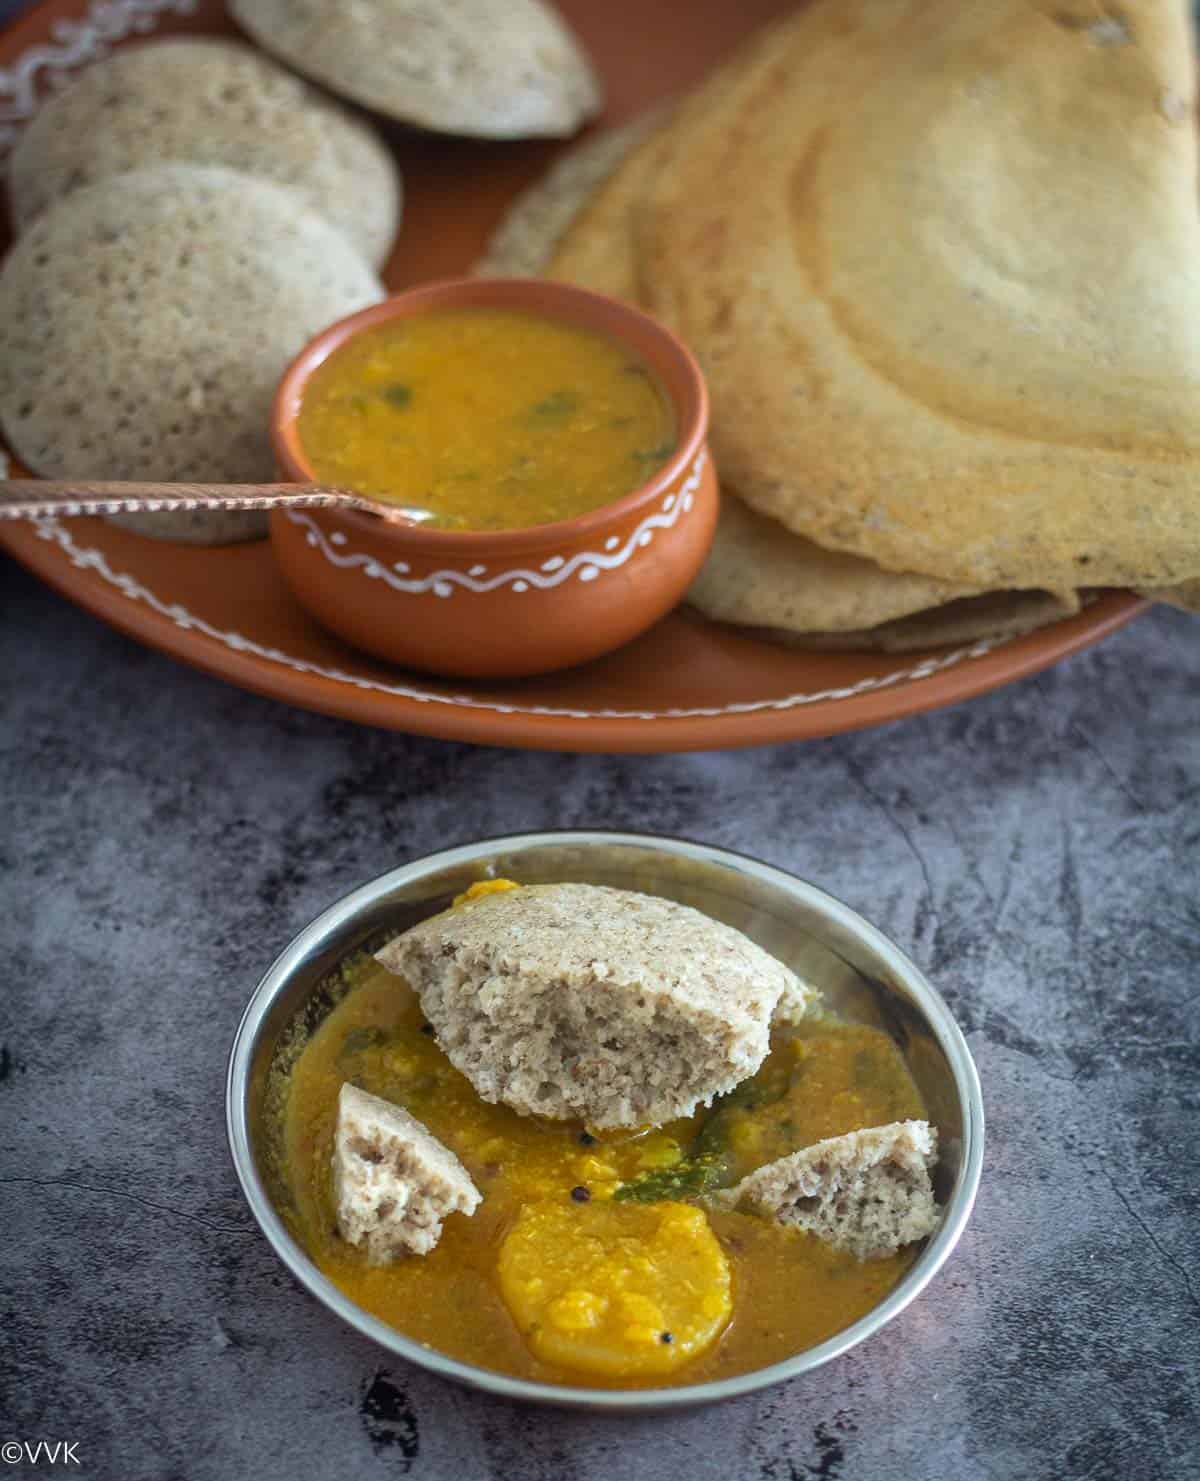 millet idli served with sambar